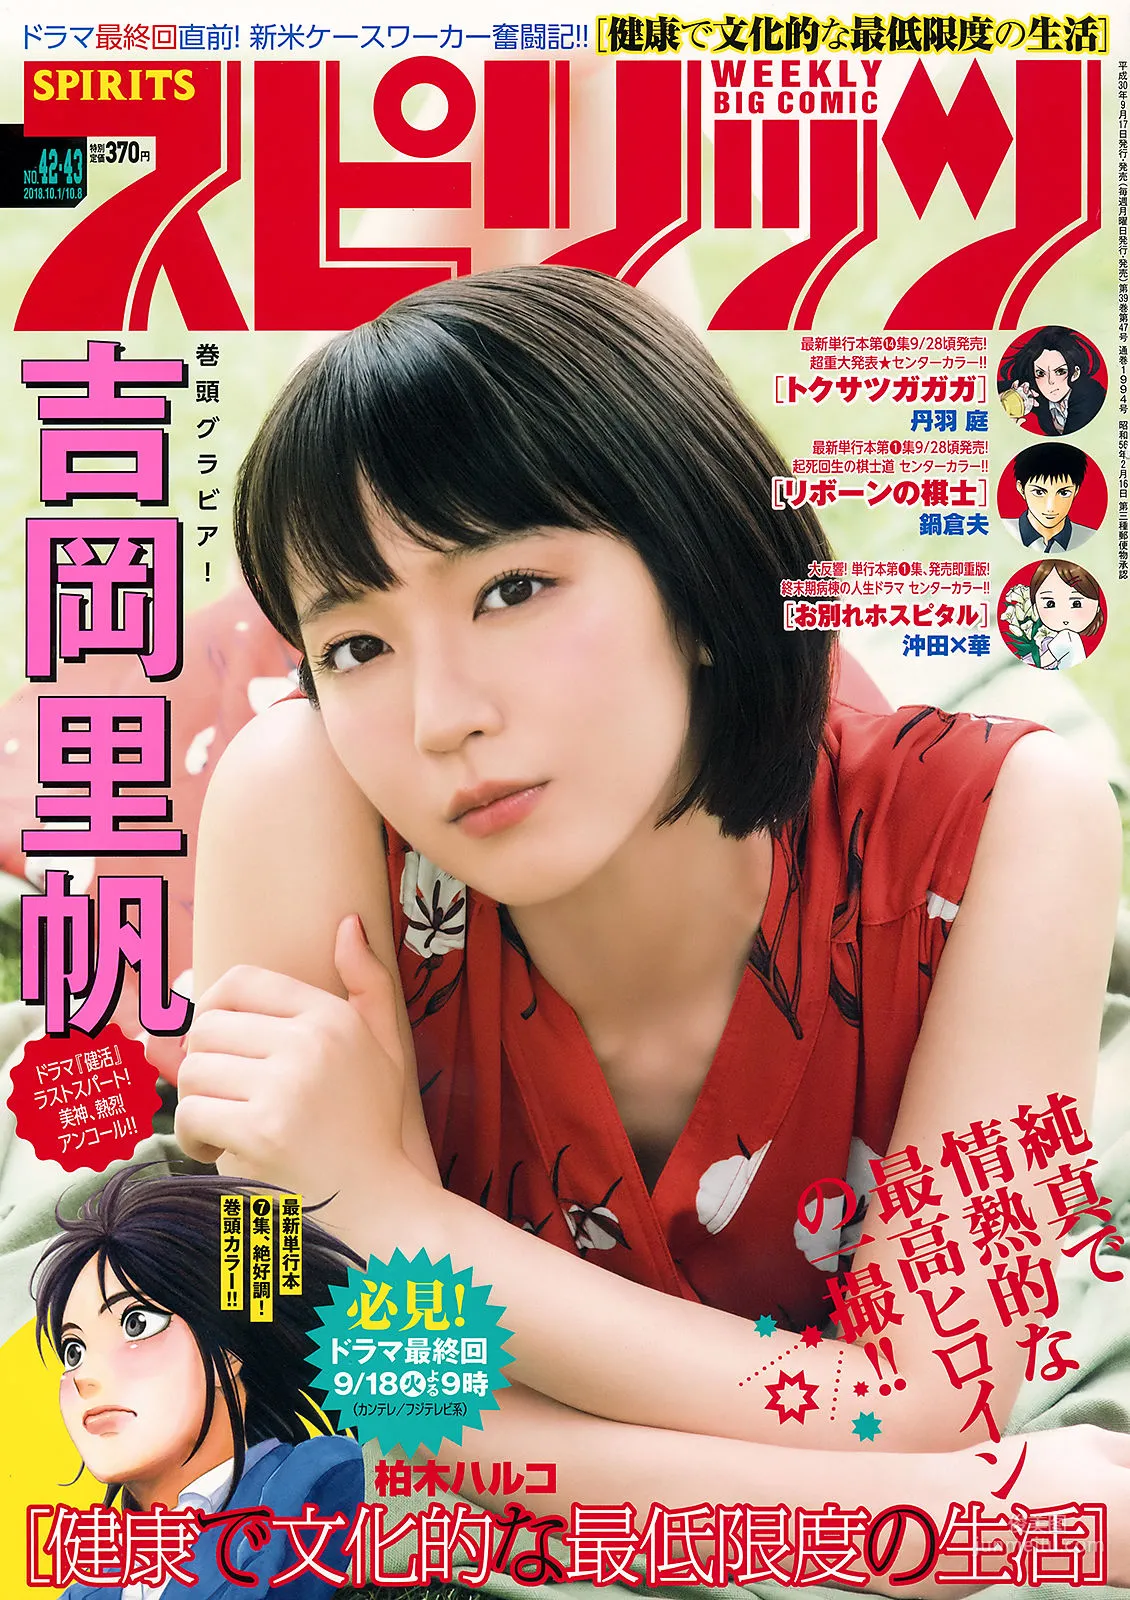 [Weekly Big Comic Spirits] 吉岡里帆 Riho Yoshioka 2018年No.42-43 写真杂志1